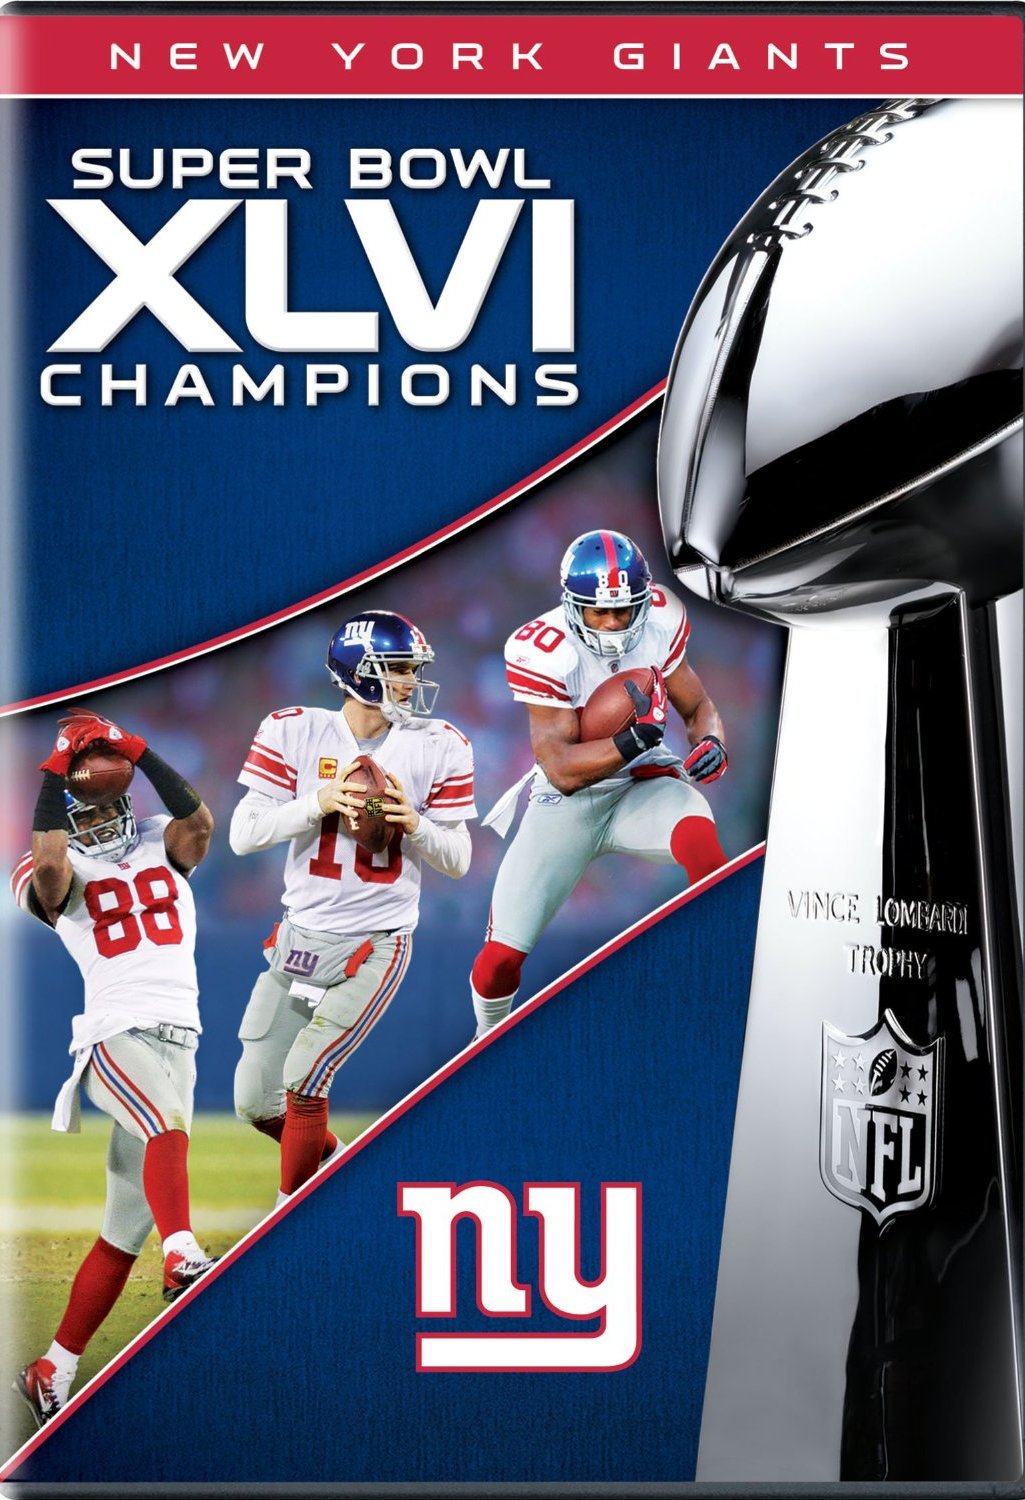 SUPER BOWL XLVI CHAMPIONS NY GIANTS | © 2012 Warner Home Video - Assignment X ...1025 x 1500